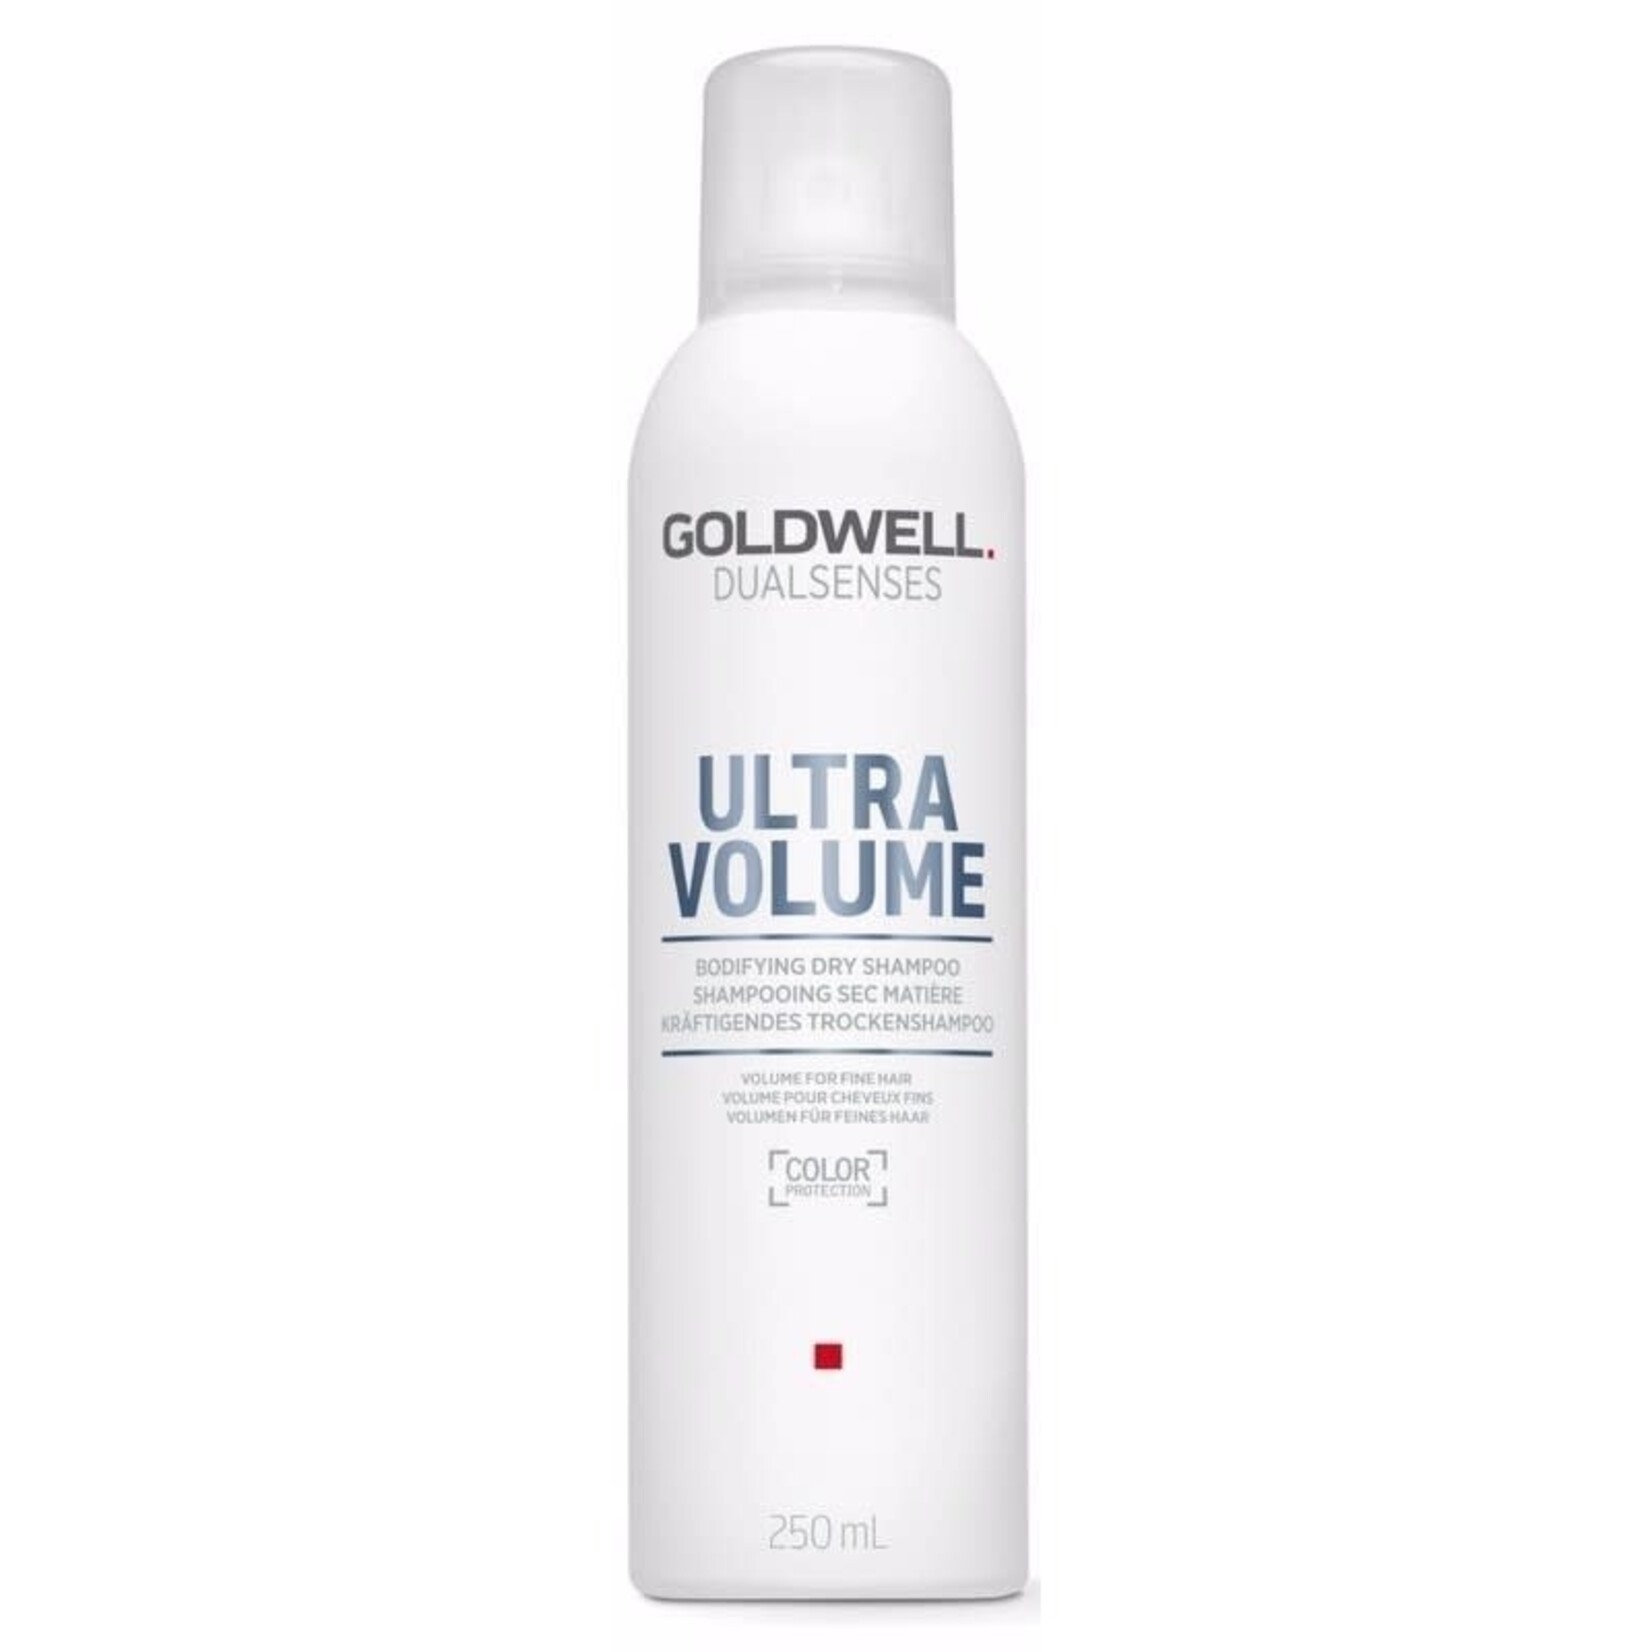 Goldwell Goldwell - Dualsenses - Ultra Volume Bodyfying Dry Shampoo 250ml